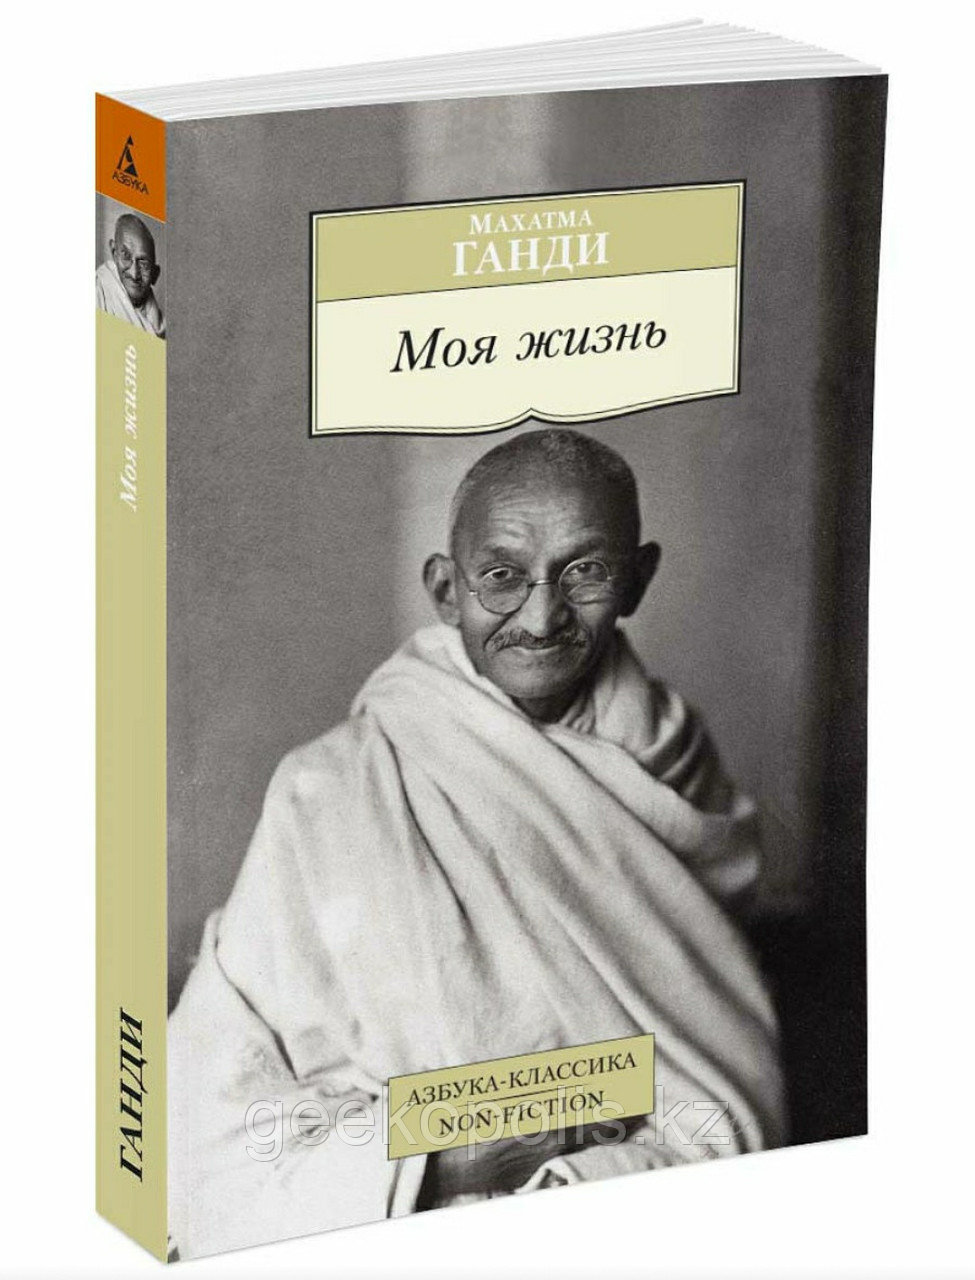 Книга "Моя жизнь", Махатма Ганди,  Мягкий переплет